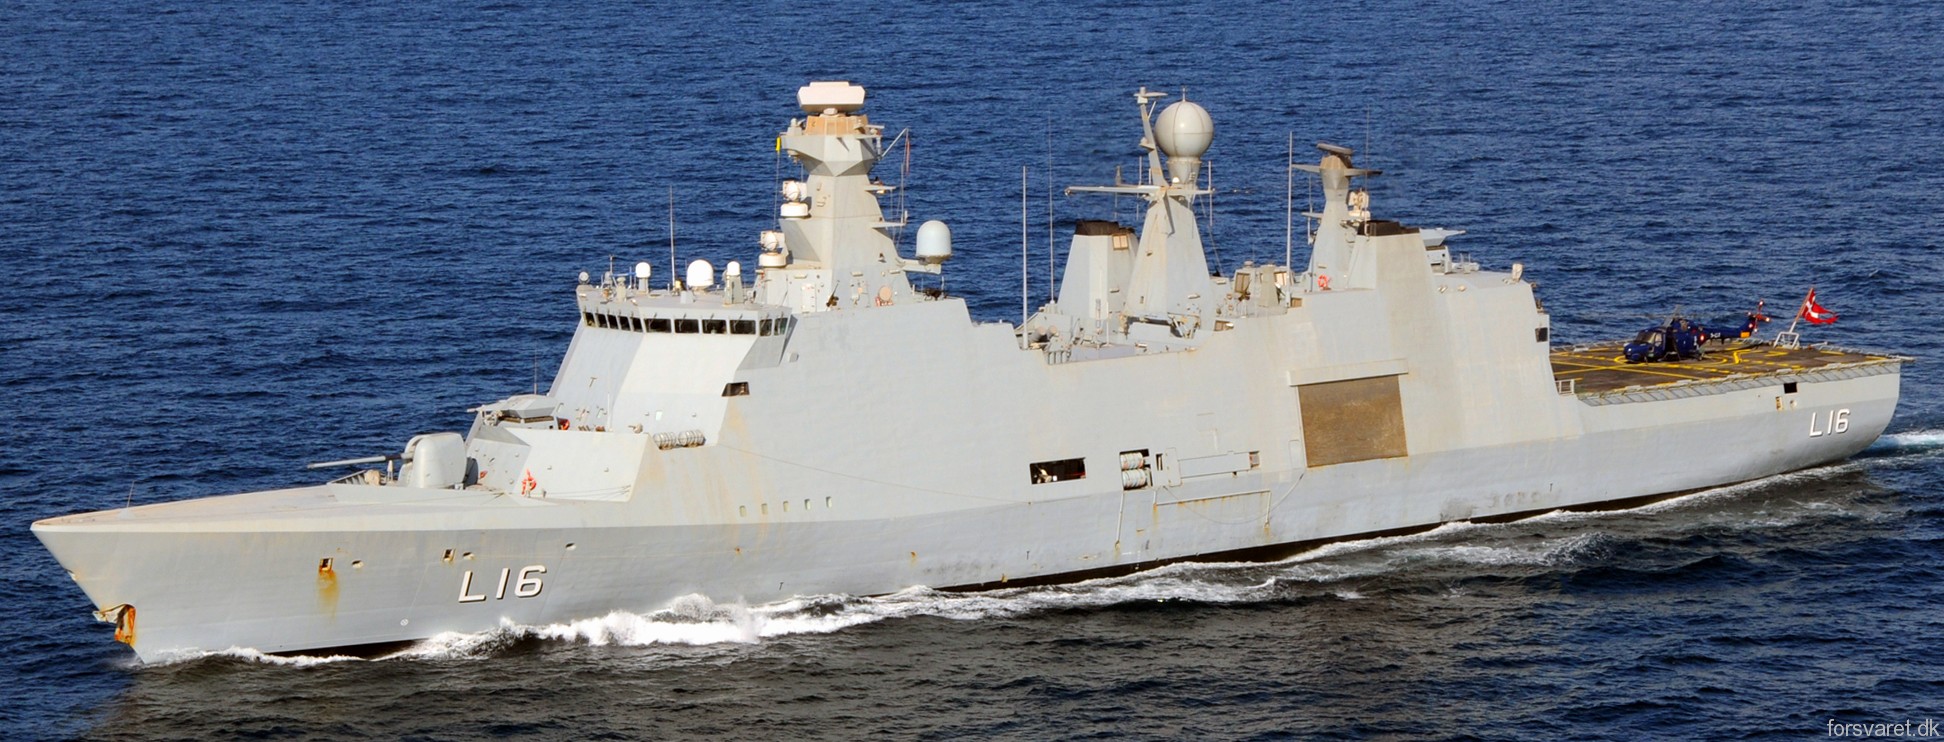 absalon class frigate command support ship royal danish navy 341 342 hdms esbern snare kongelige danske marine stanflex odense steel 69x